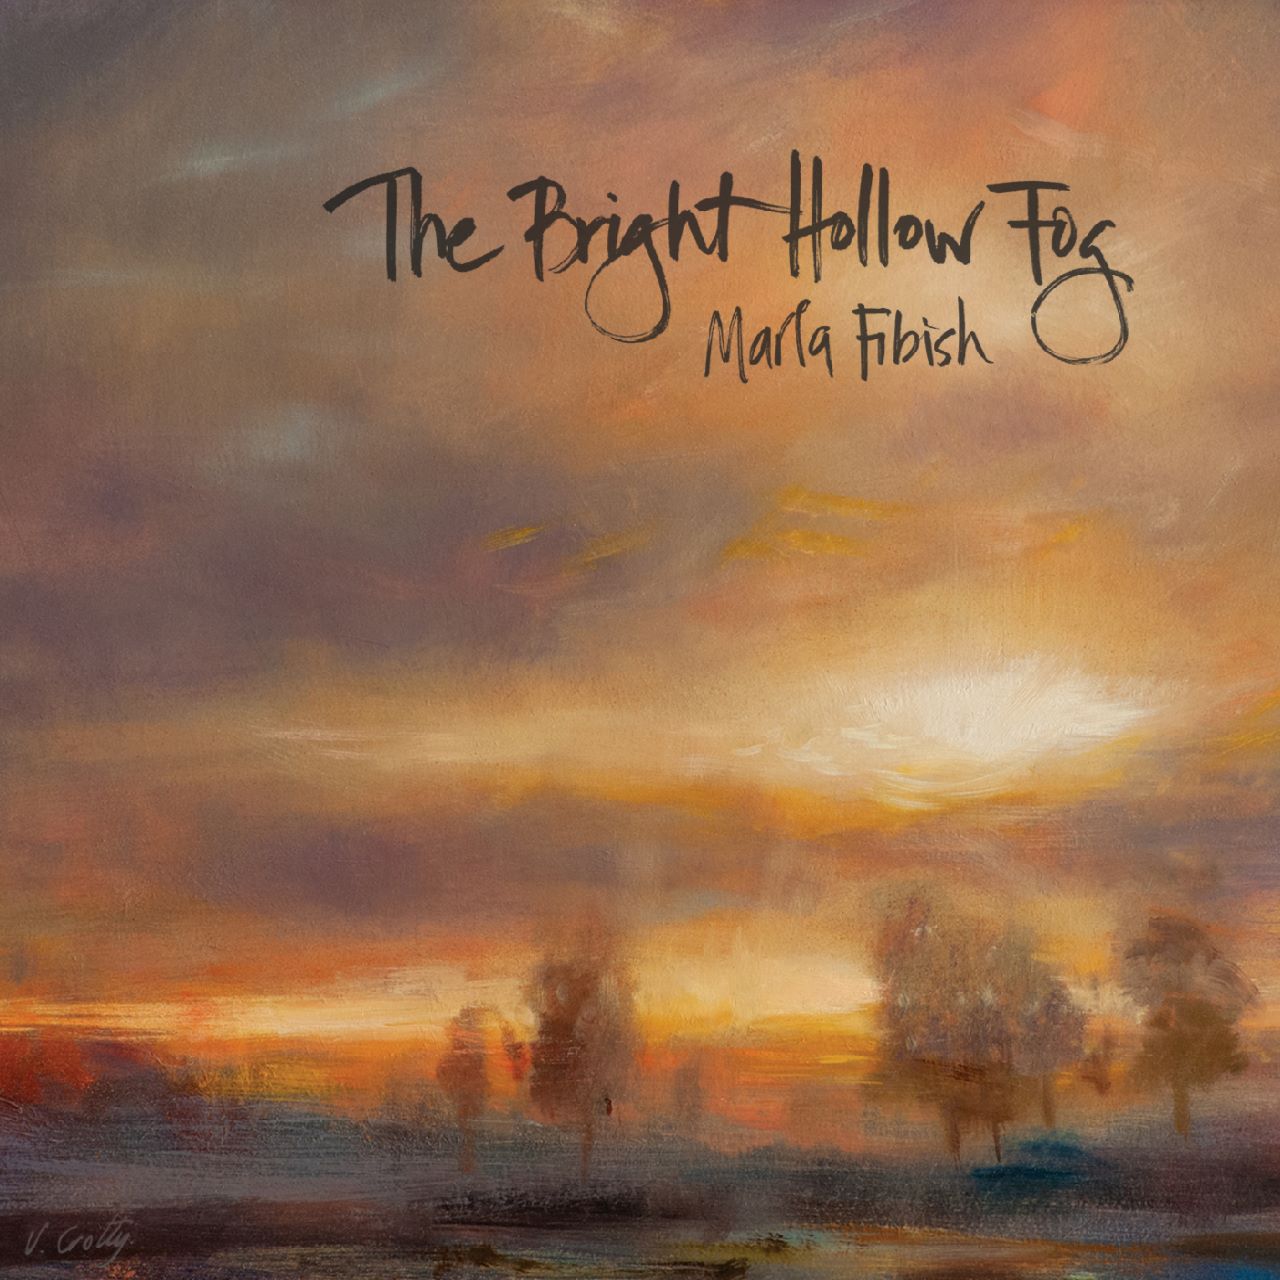 bish - The Bright Hollow Fog cover album